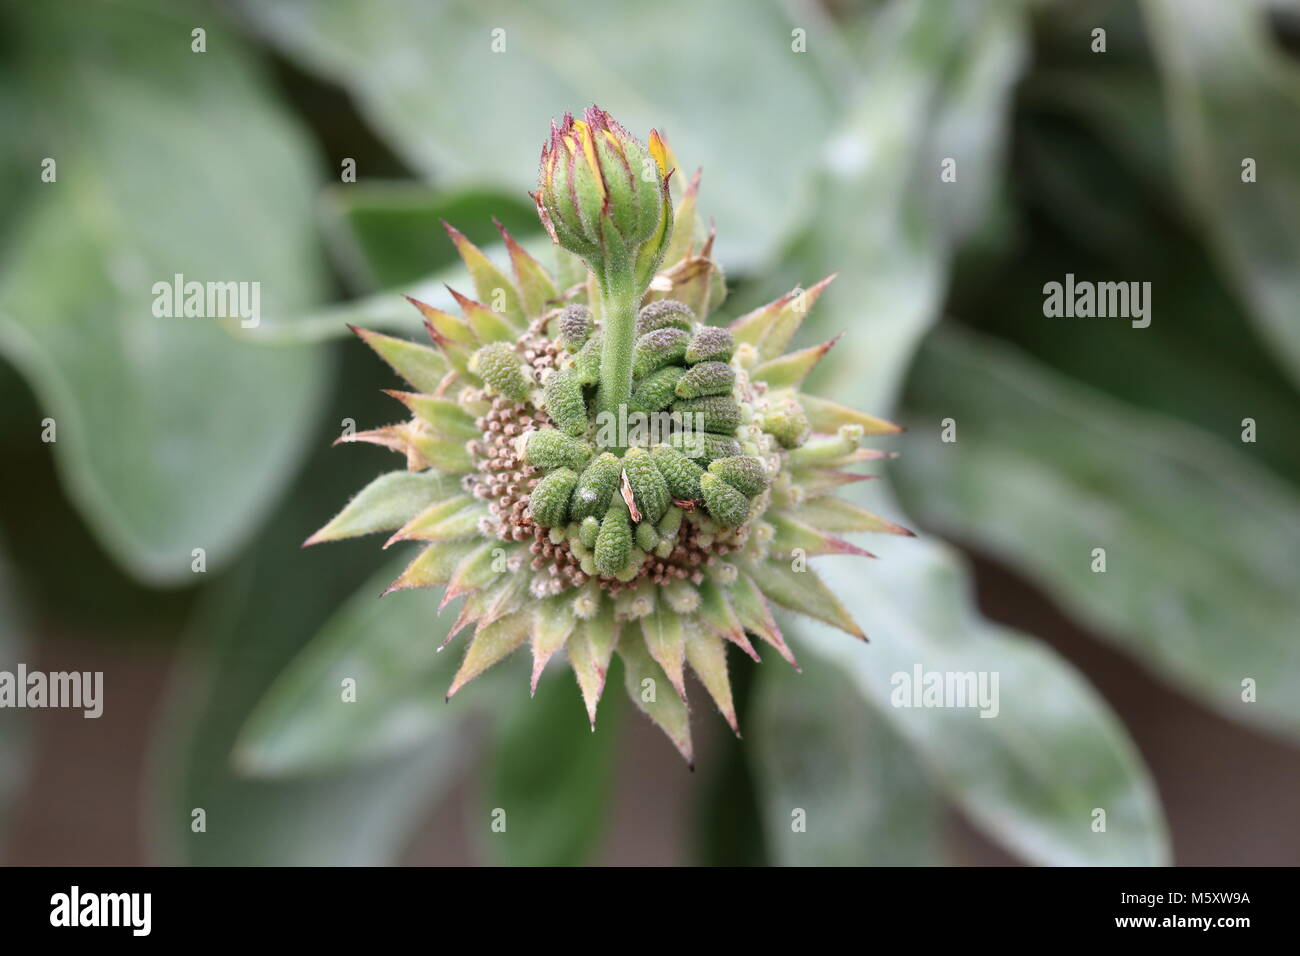 Macro shot of seed head of Pot Marigold or also known as Calendula officinalis Stock Photo